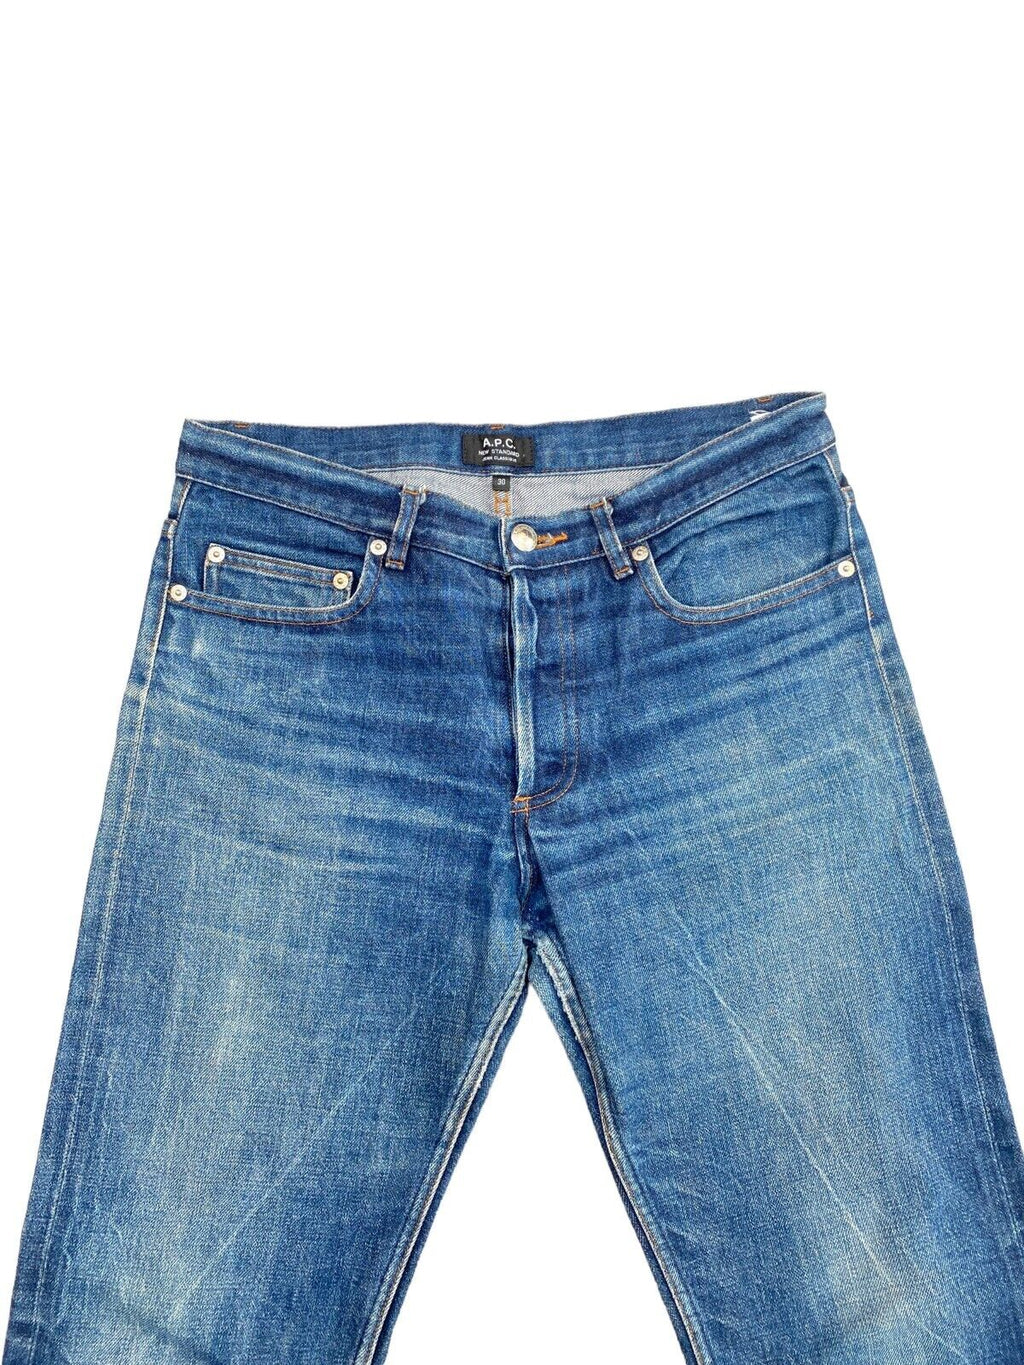 New Standard  Denim jeans   Butler Denim Jeans